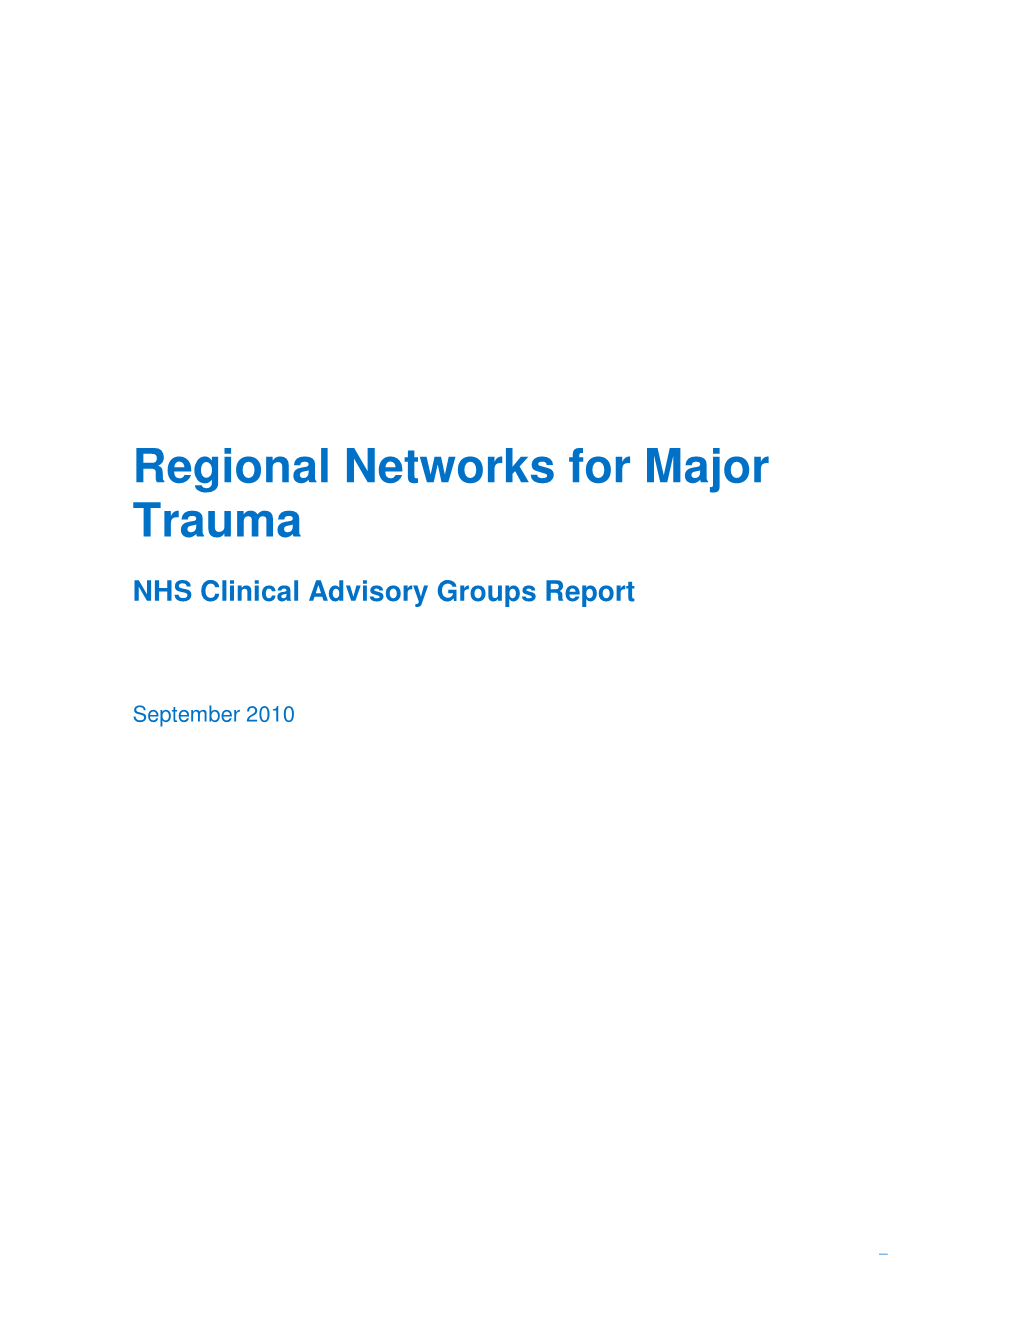 Regional Networks for Major Trauma